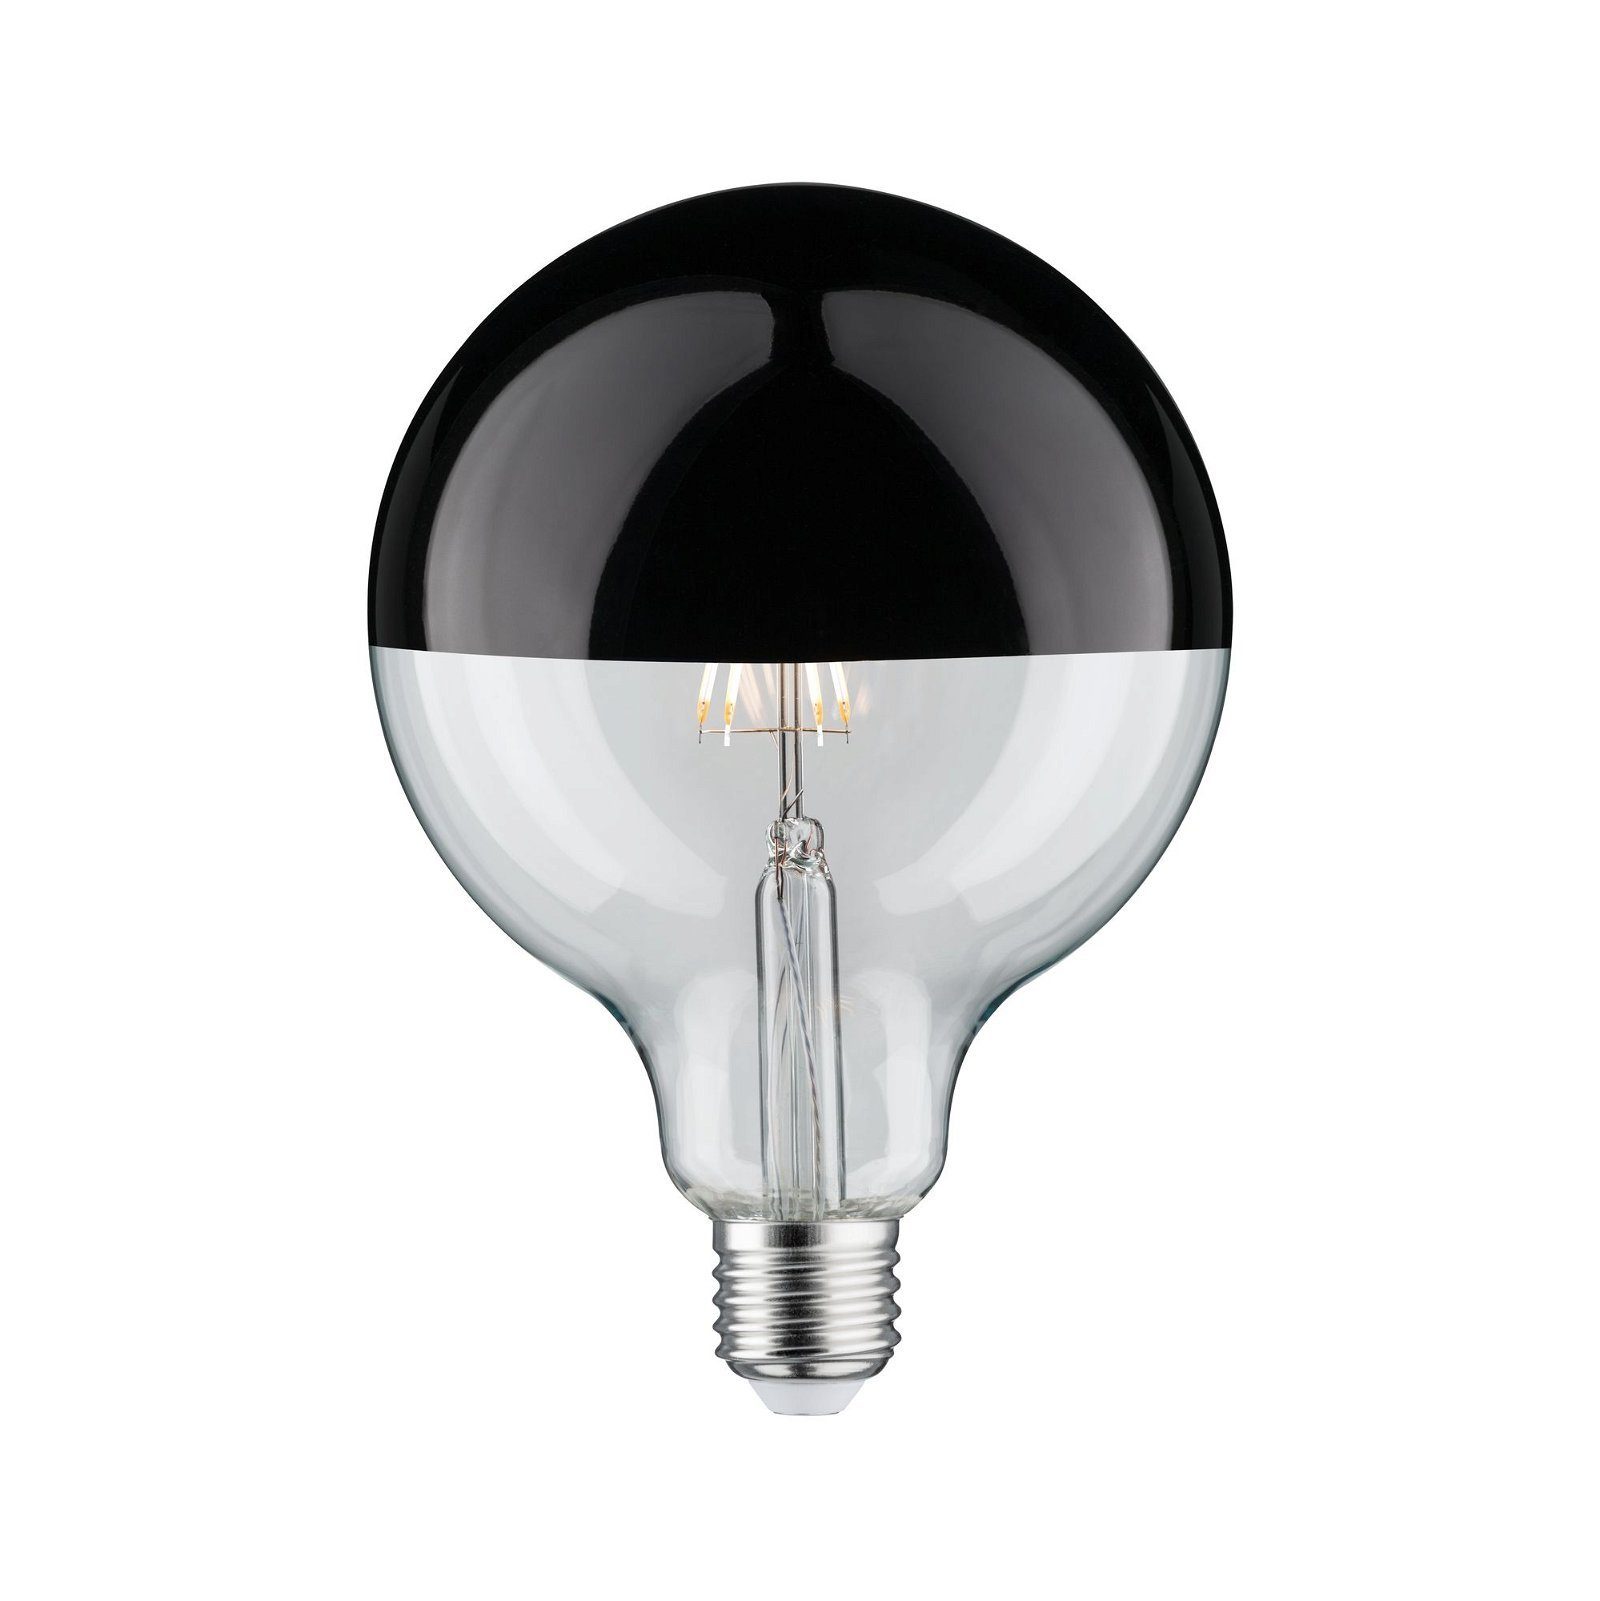 Paulmann LED-Leuchtmittel G125 Kopfspiegel 600lm Warmweiß 230V 6,5W chrom, 2700K schwarz St., 1